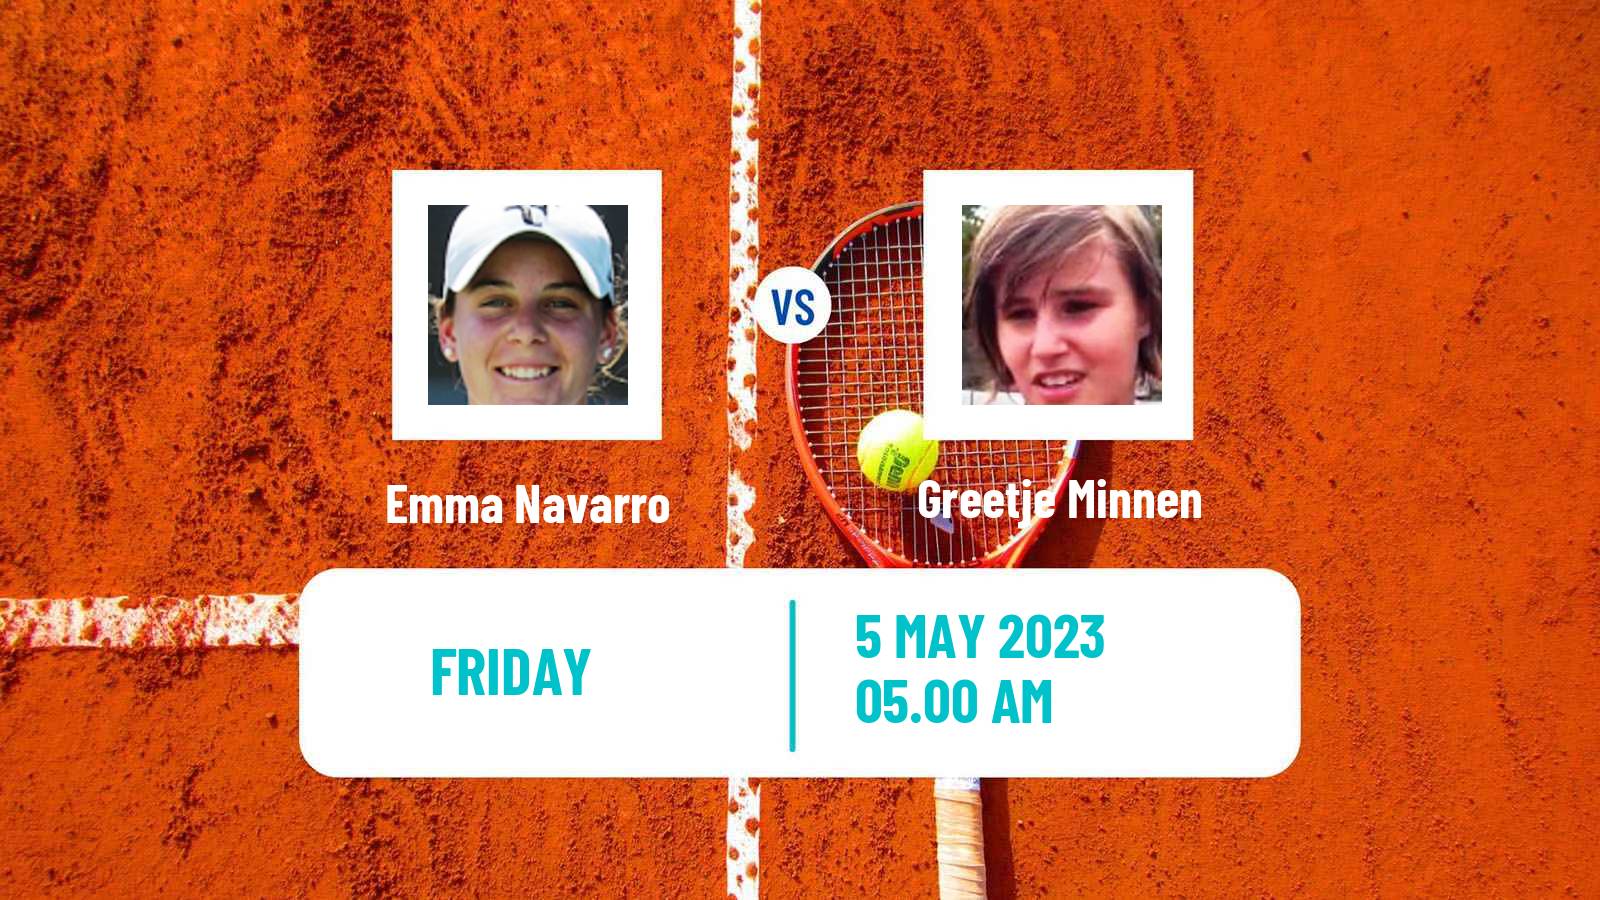 Tennis ATP Challenger Emma Navarro - Greetje Minnen